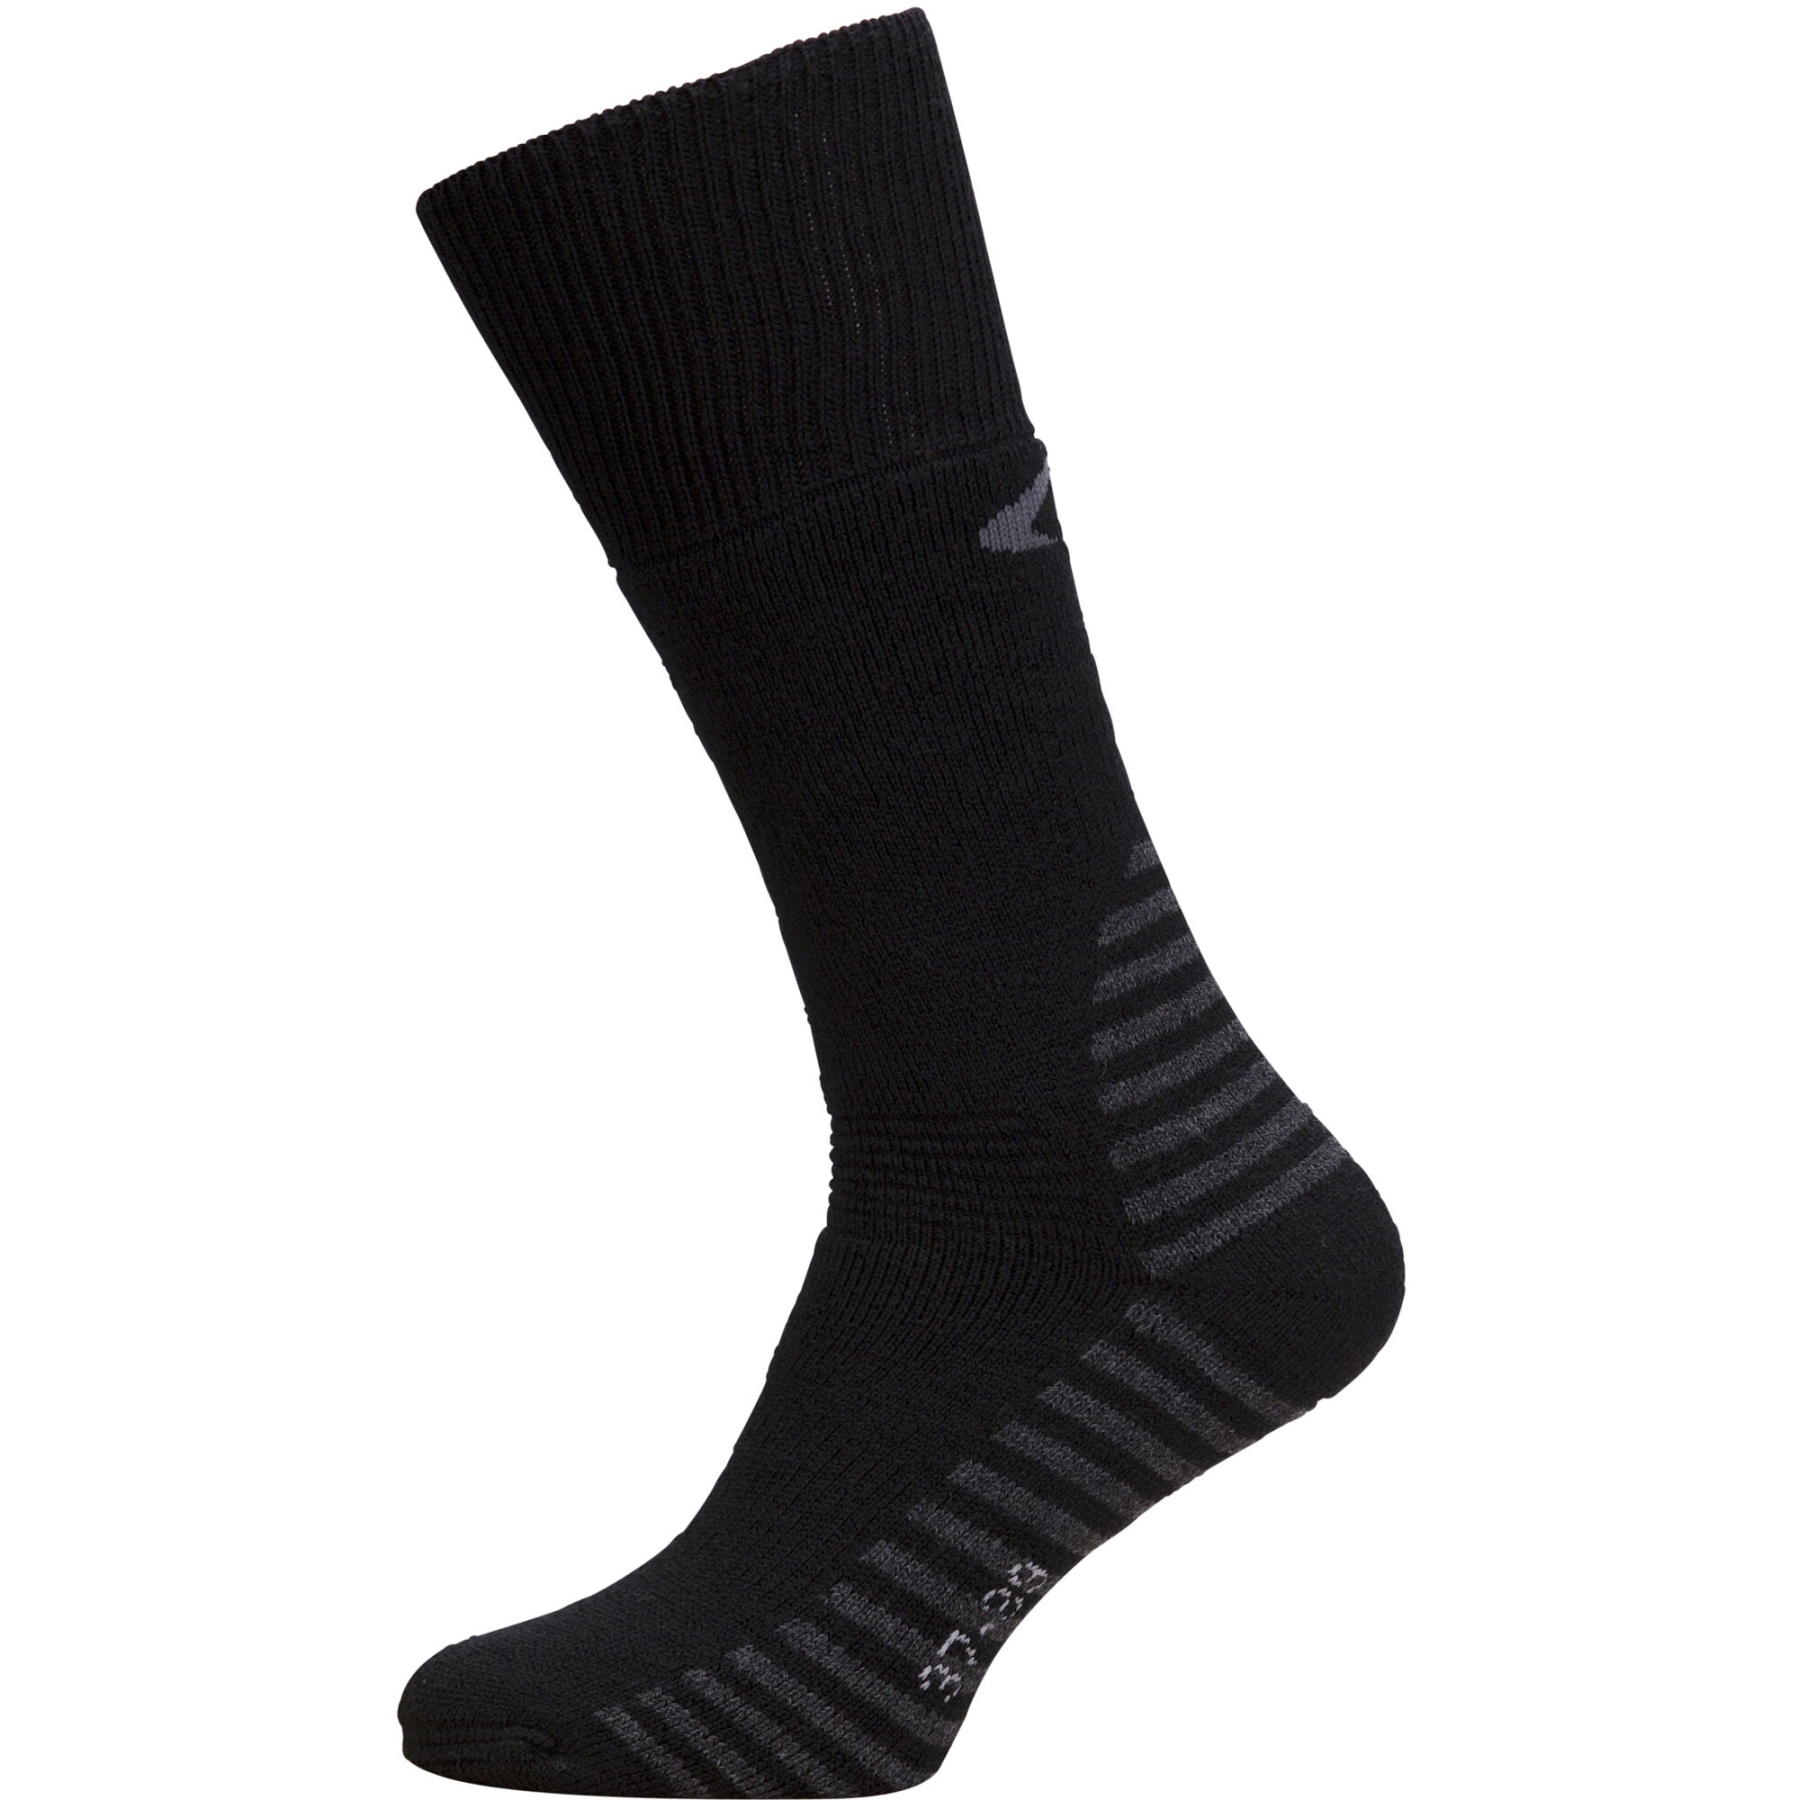 Productfoto van Ulvang Hiking Extreme Sokken - Black/Charcoal Melange